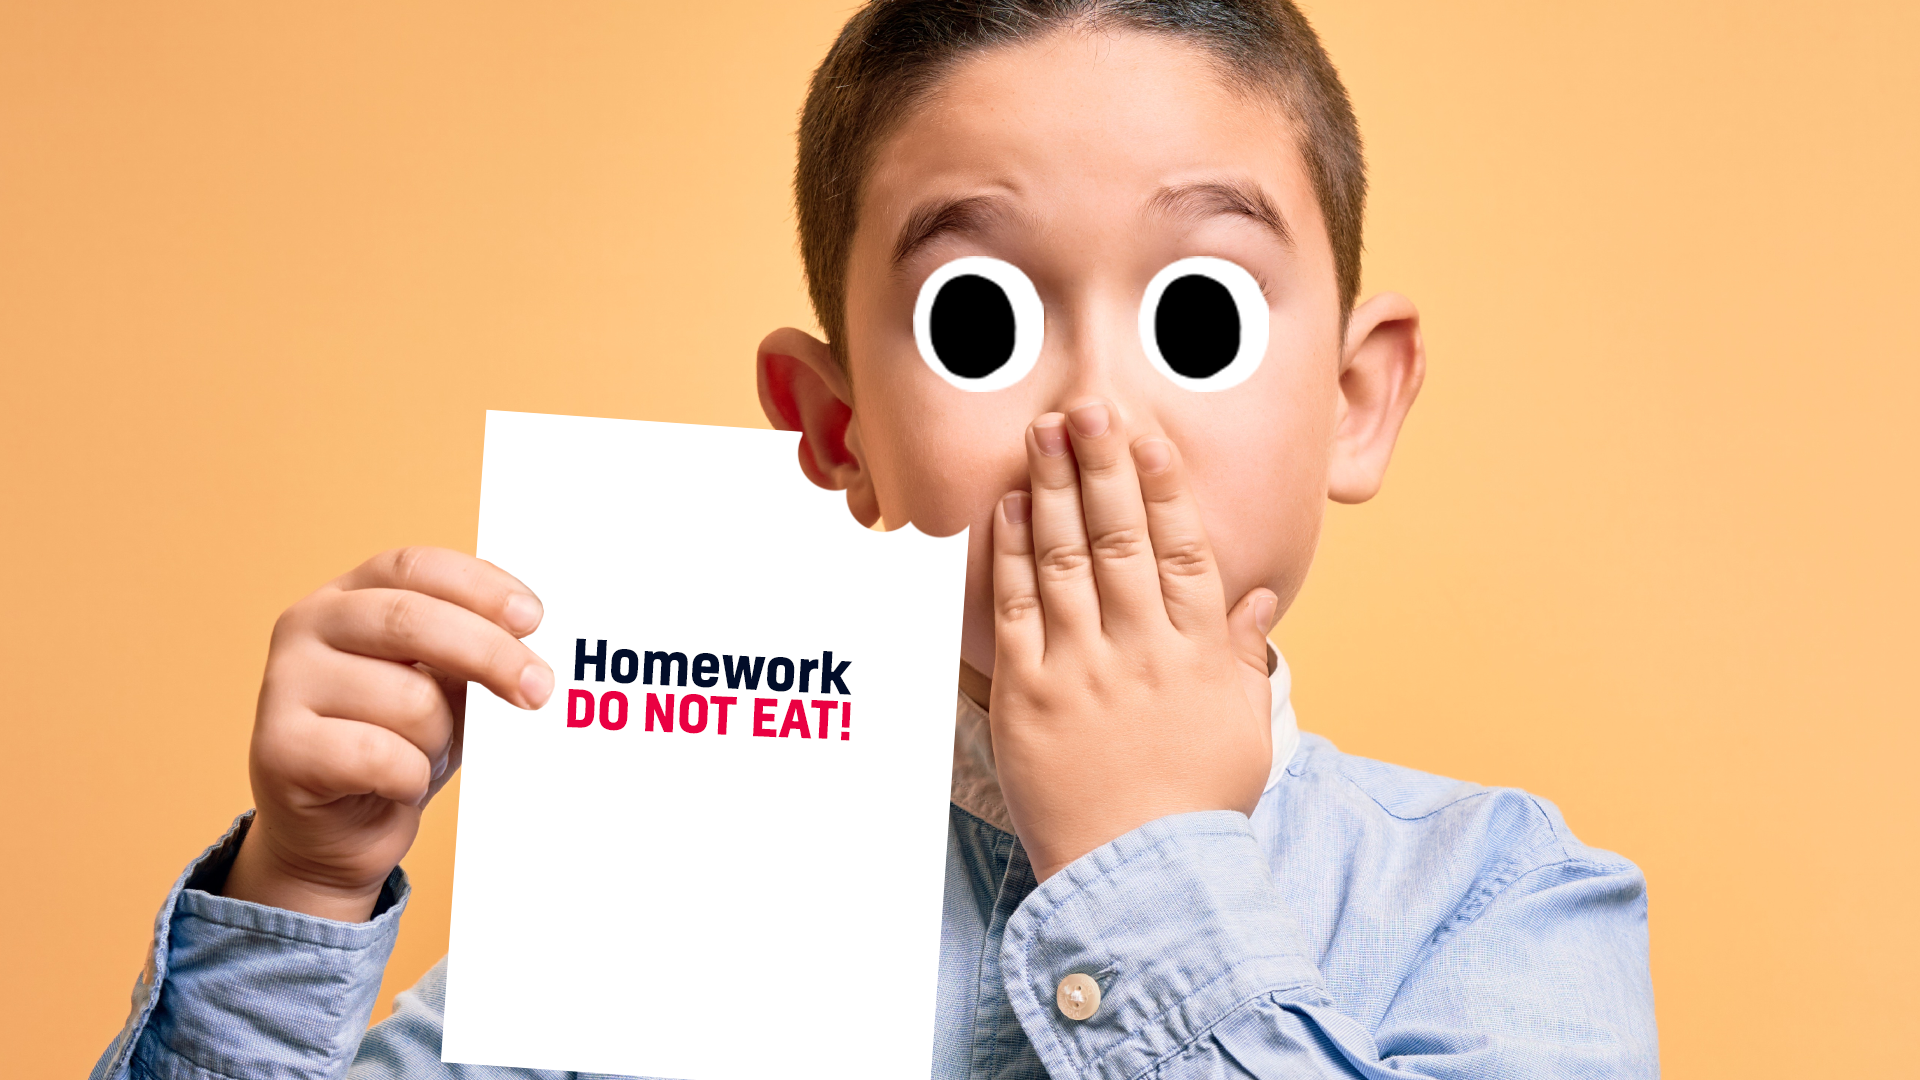 A boy eating his homework